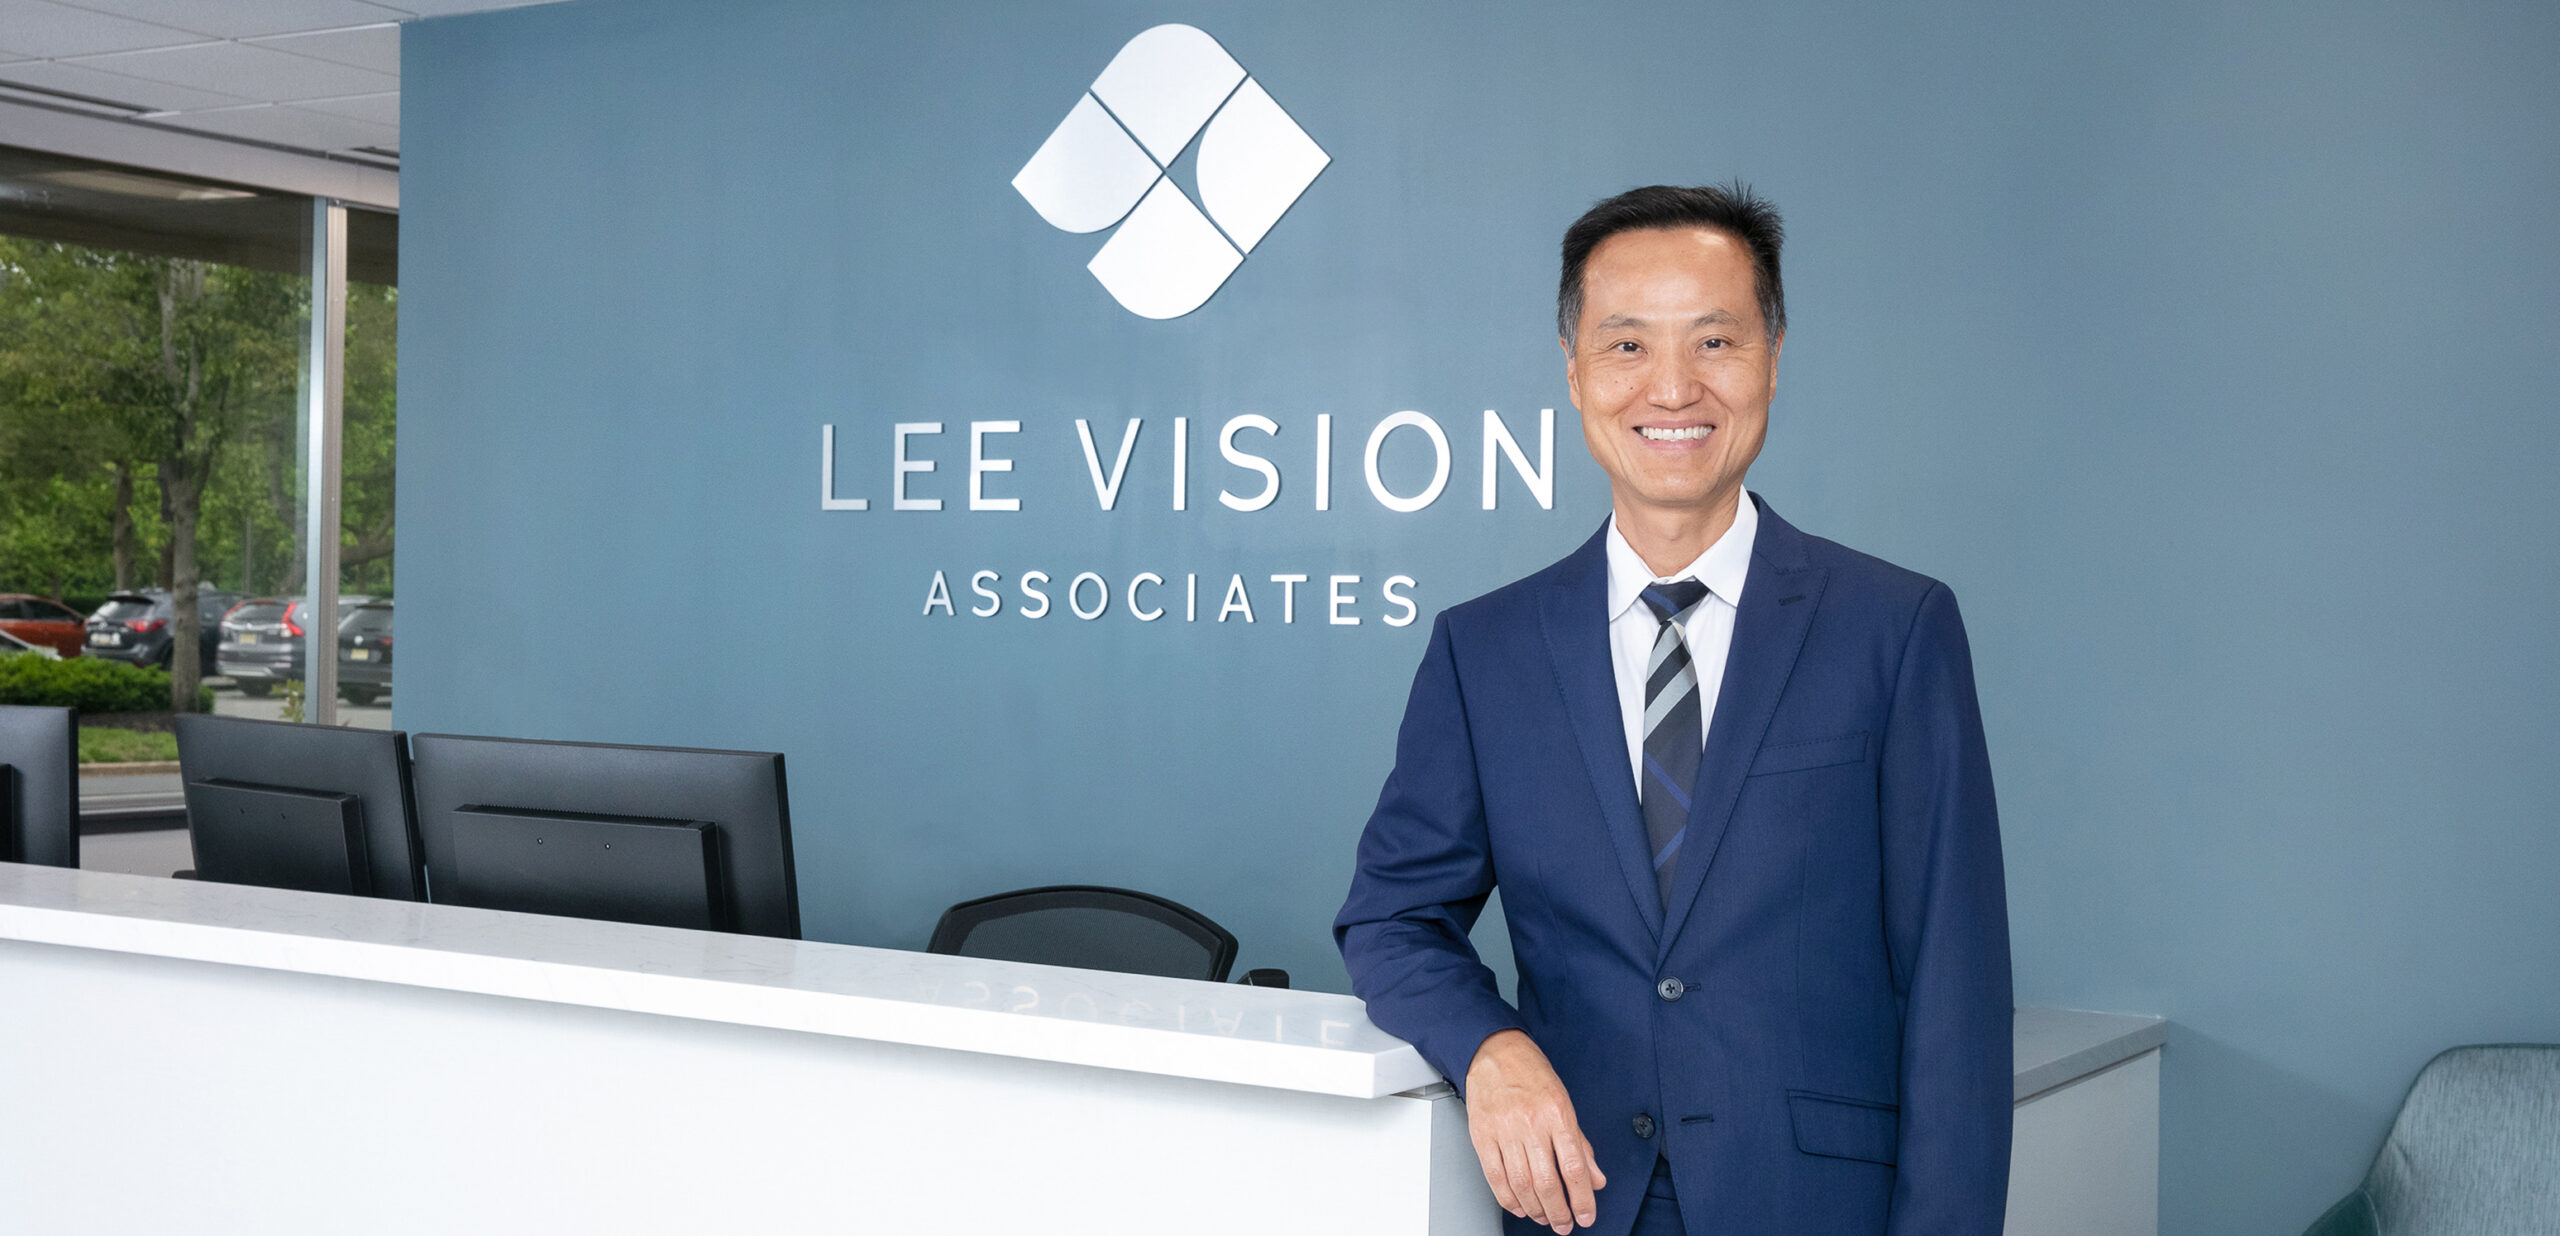 Lee Vision Associates